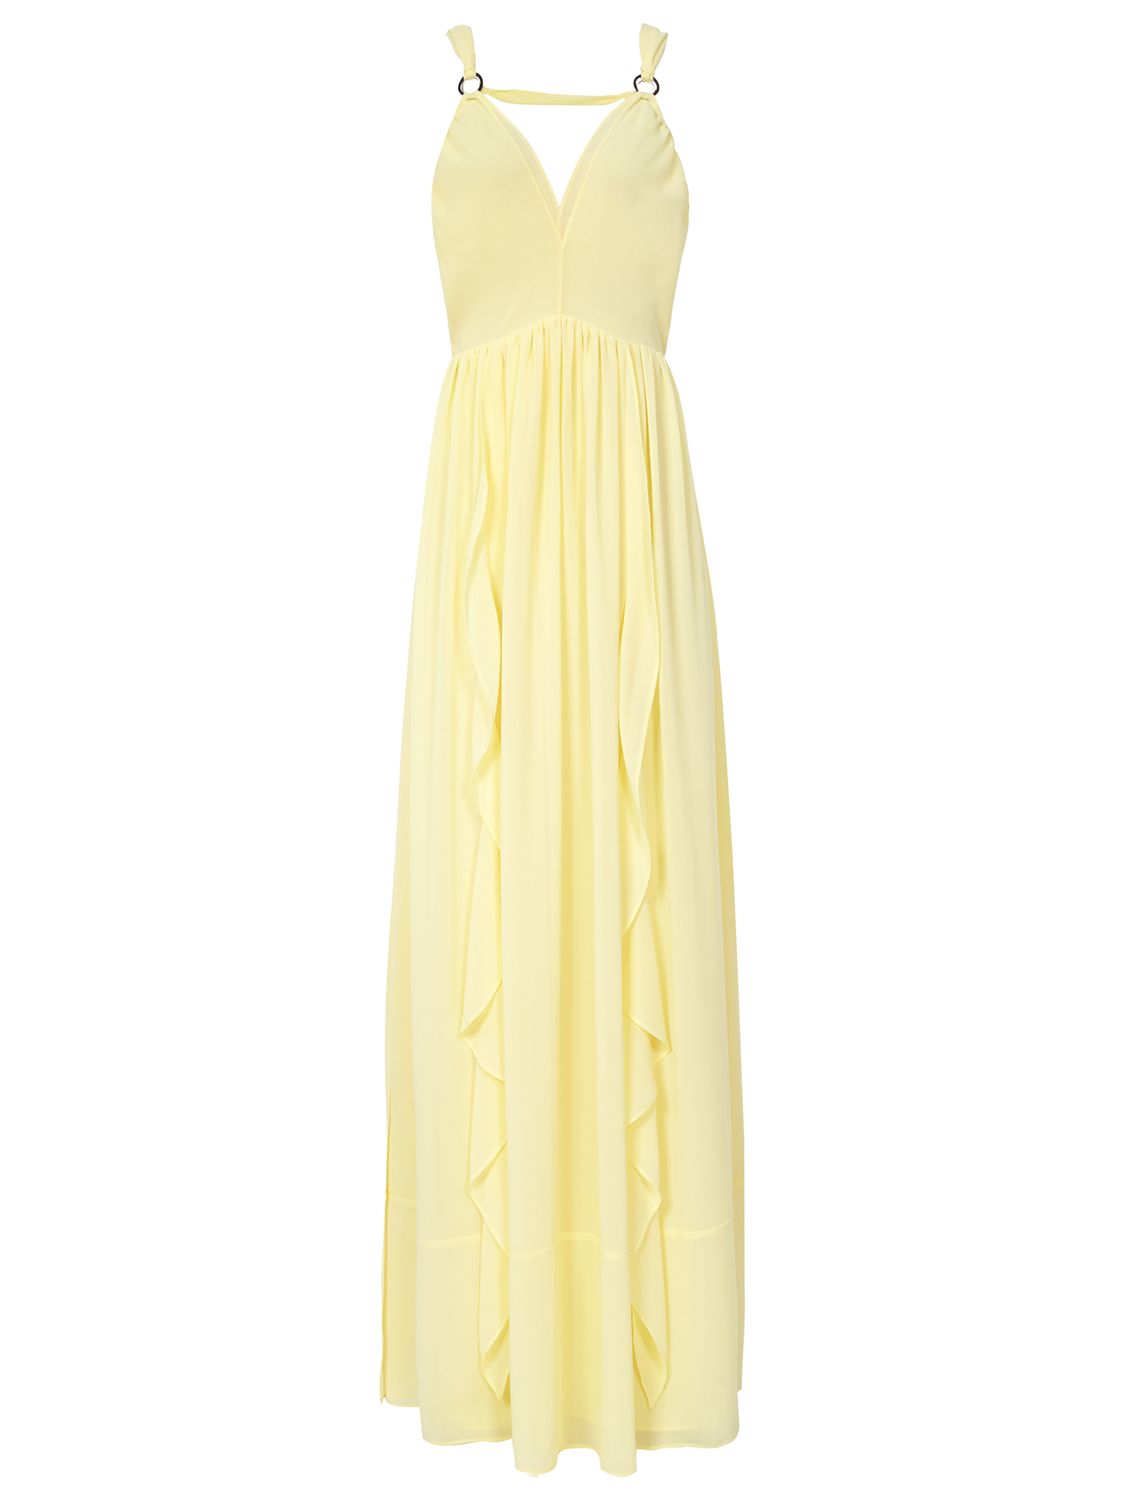 Reiss Carlotta Strappy Dress, Yellow